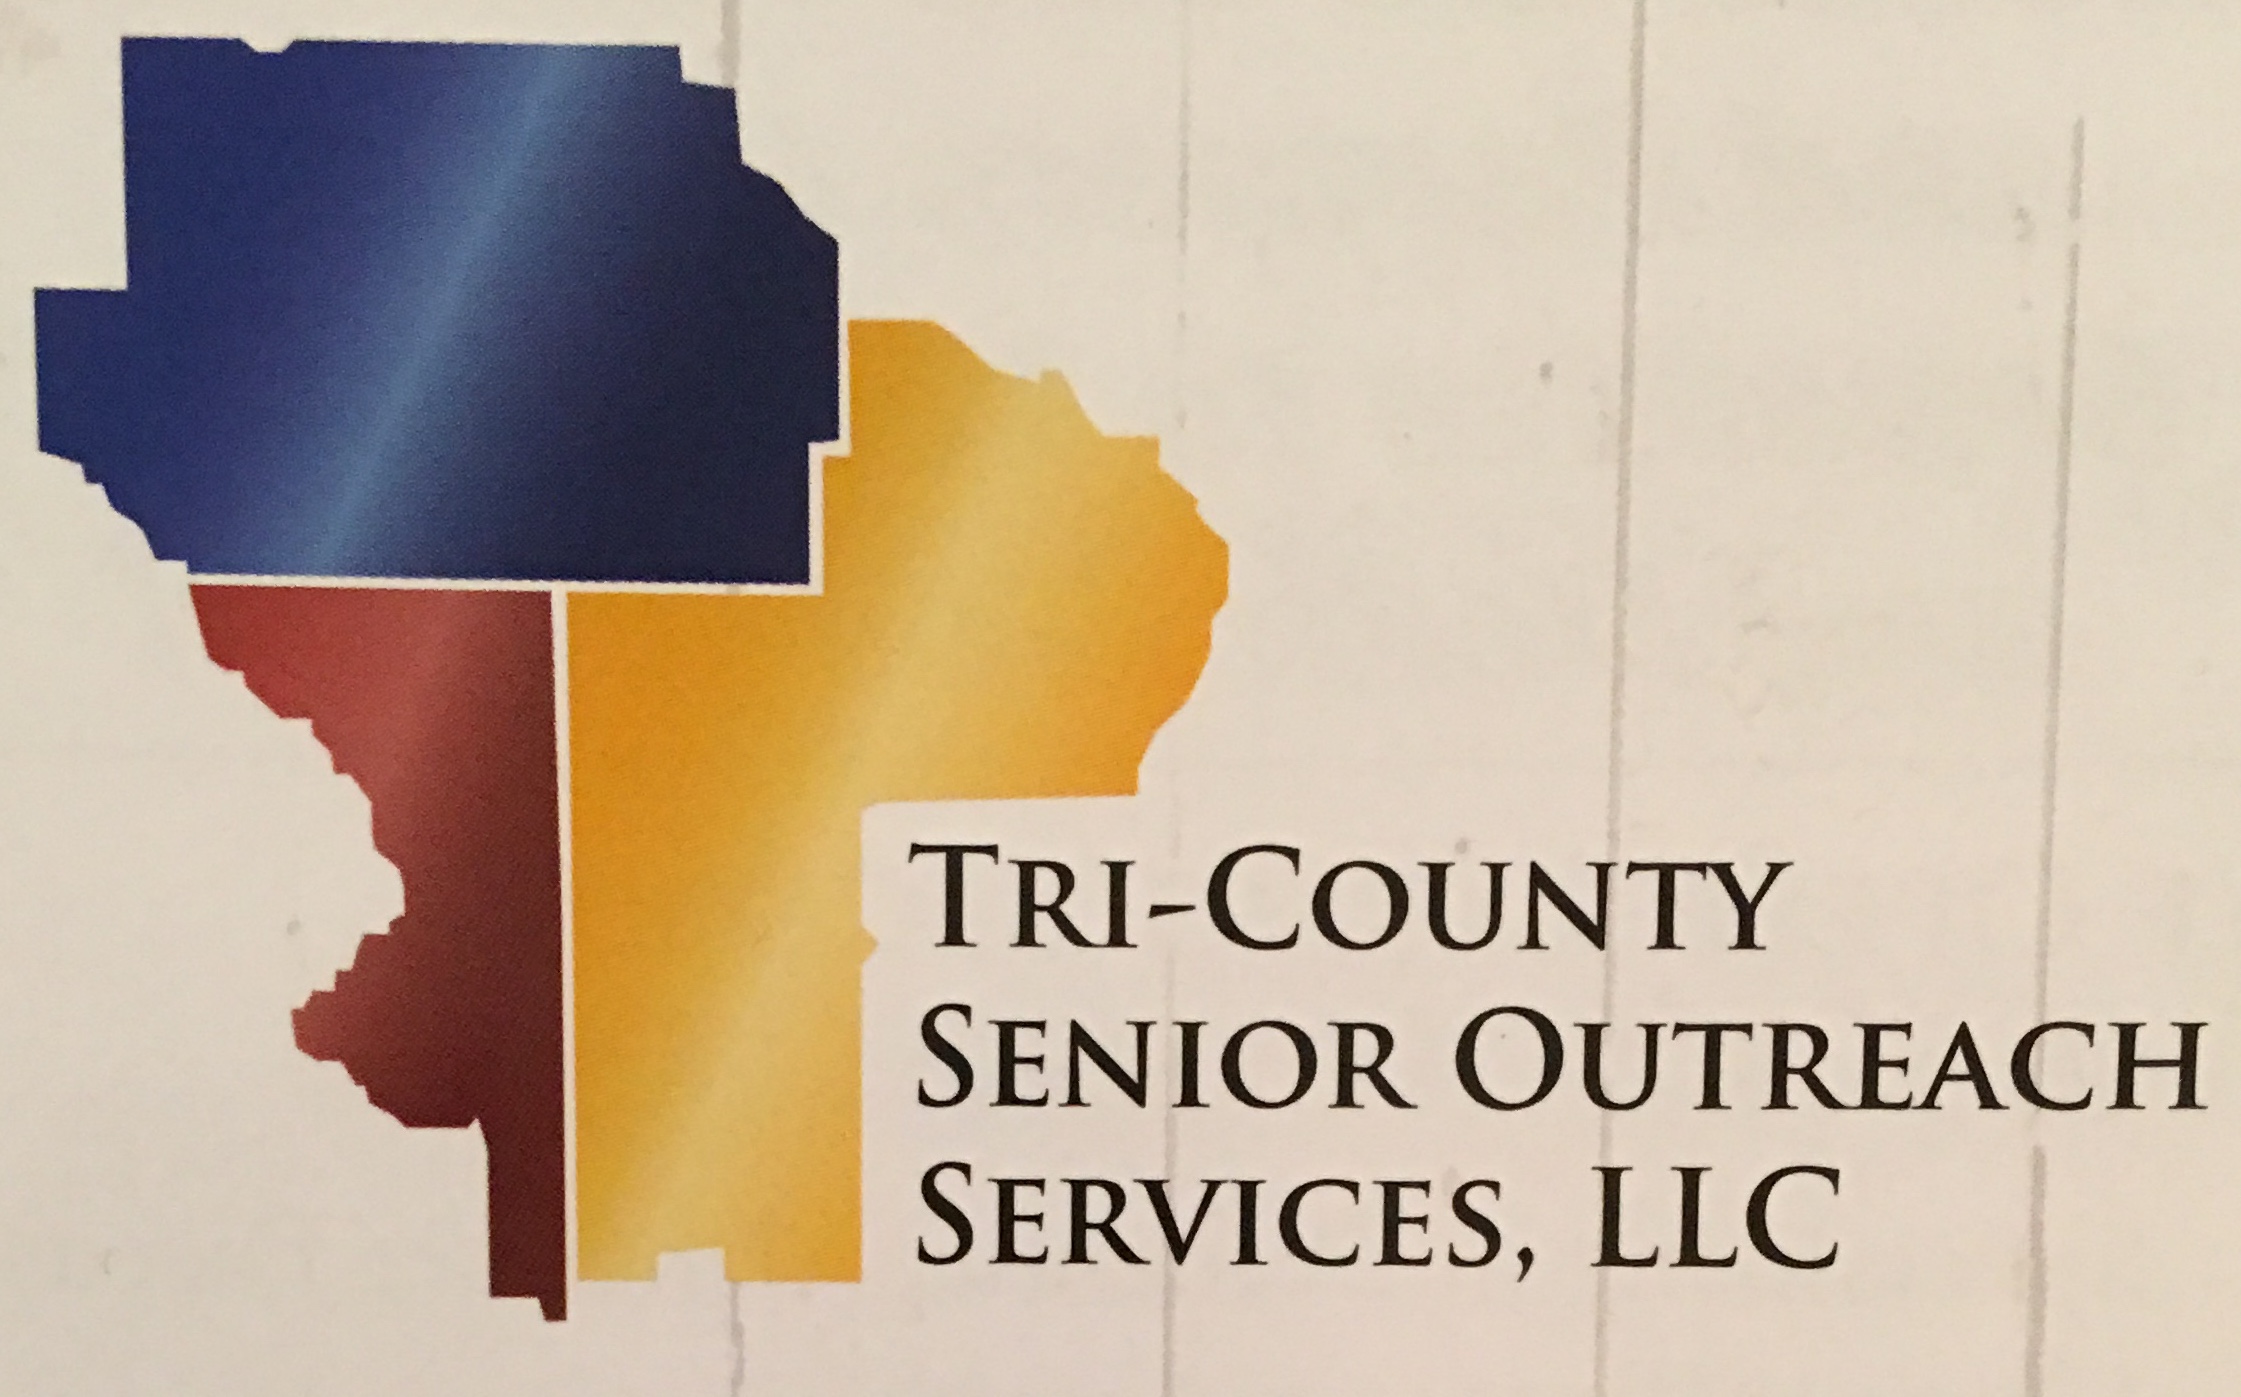 Tri-County Senior Outreach Services, LLC